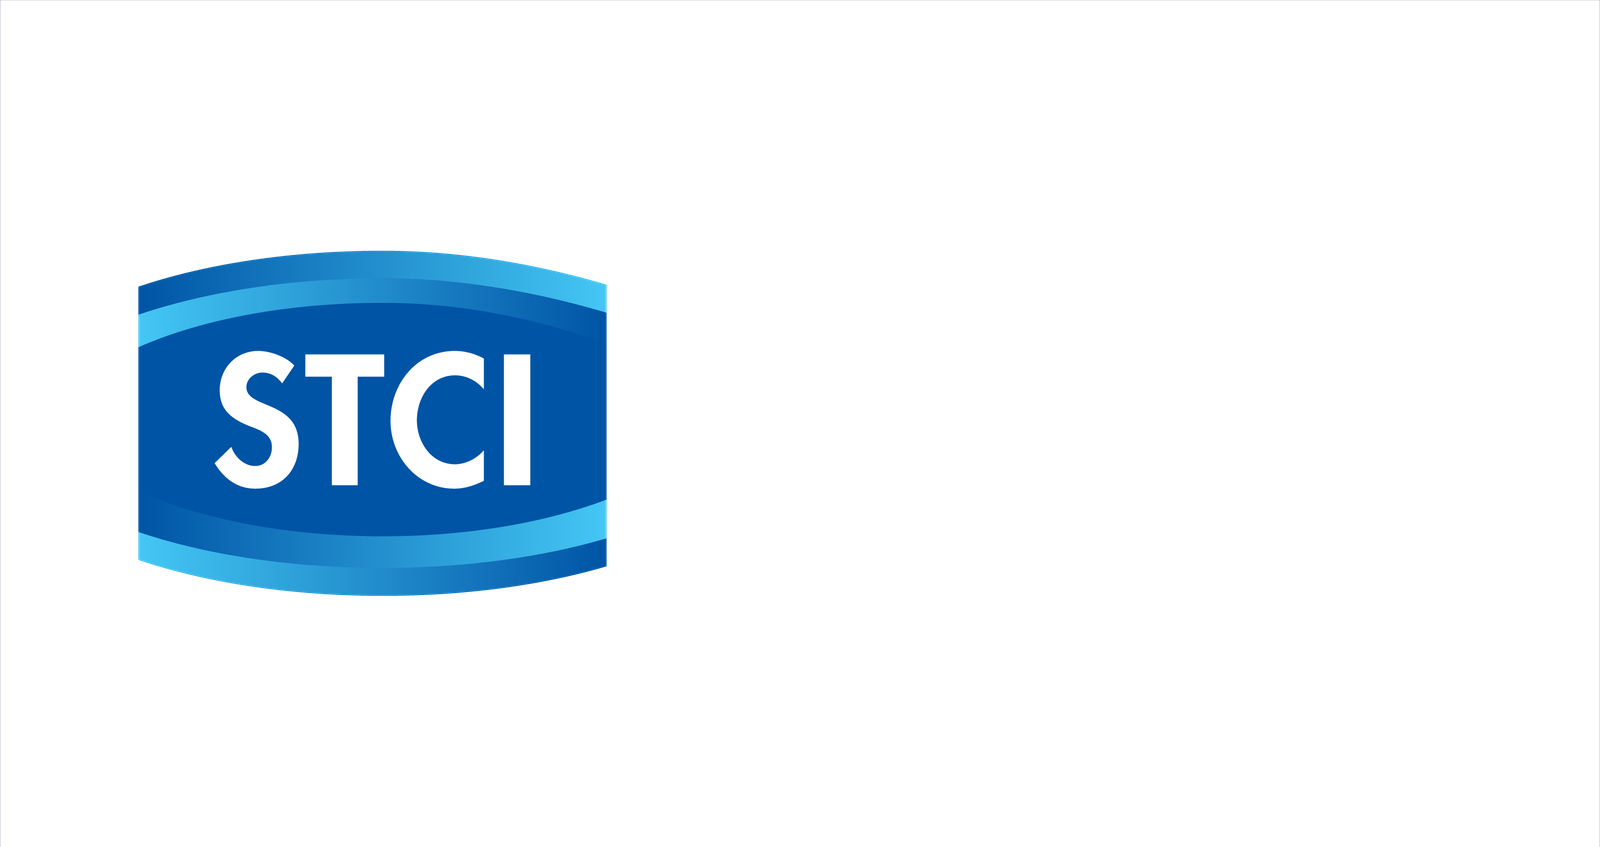 SOCIETE TABBARA logo